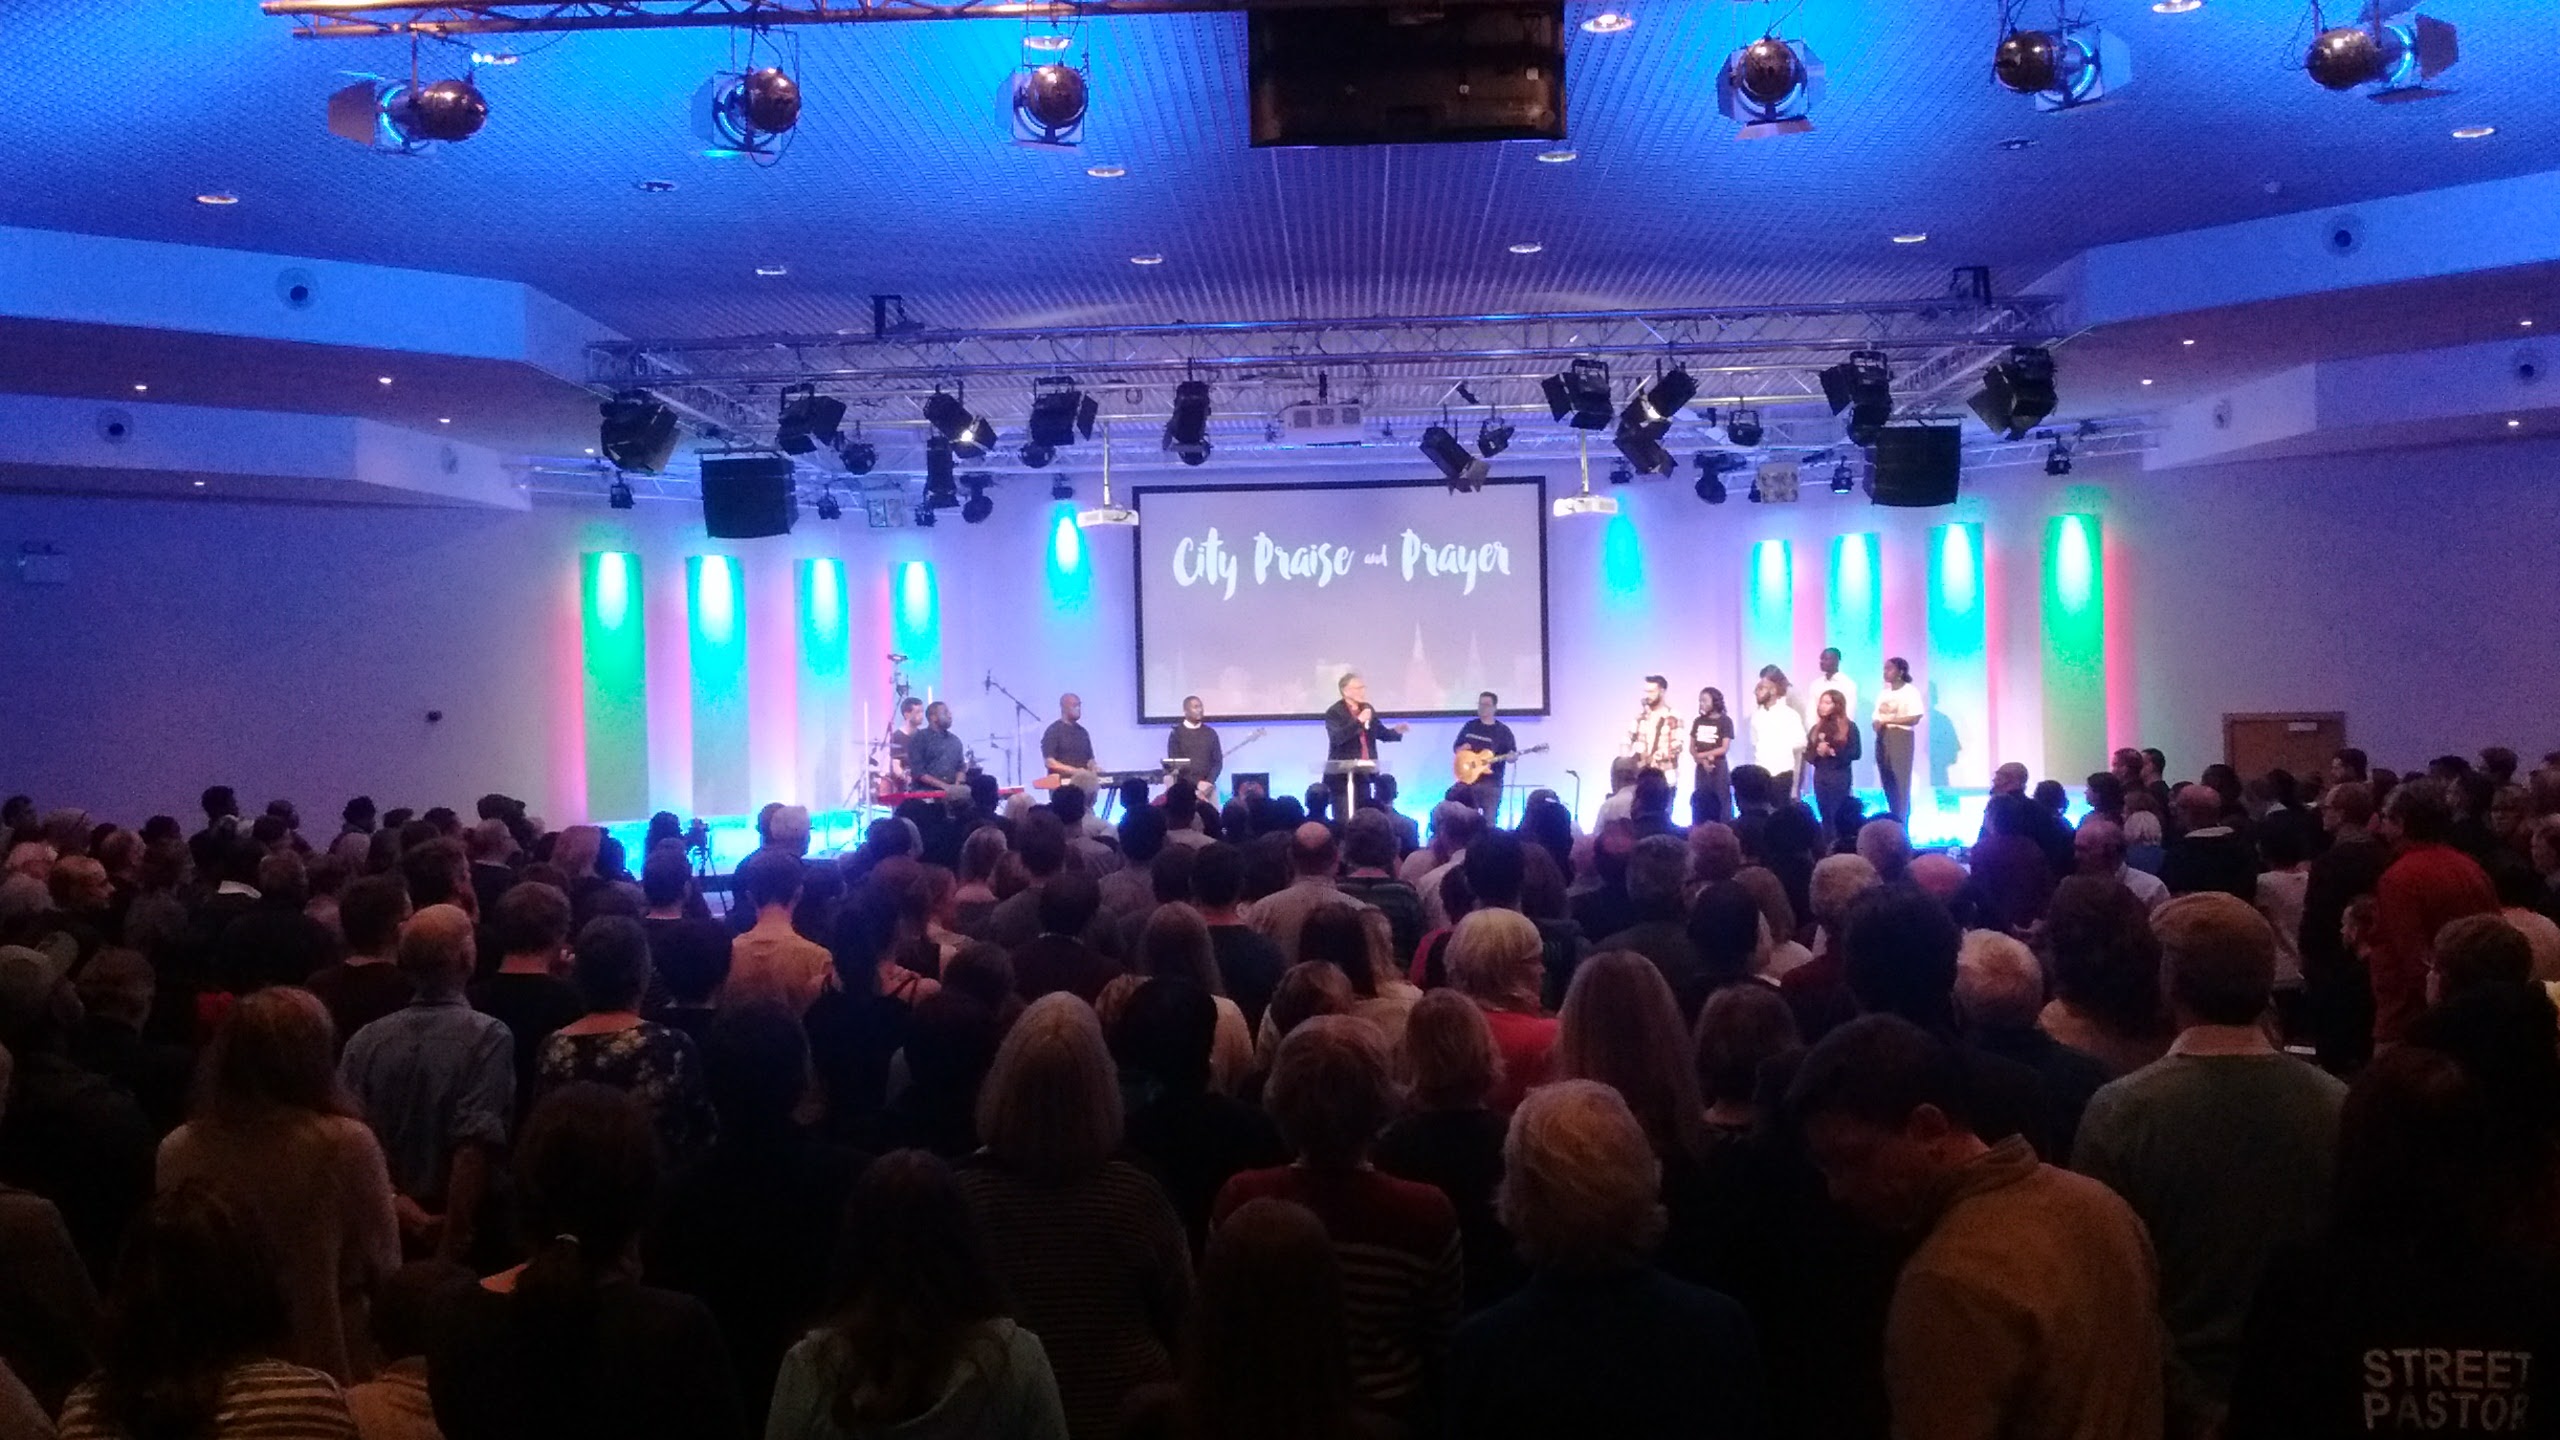 Coventry churches in a City Praise & Prayer meeting